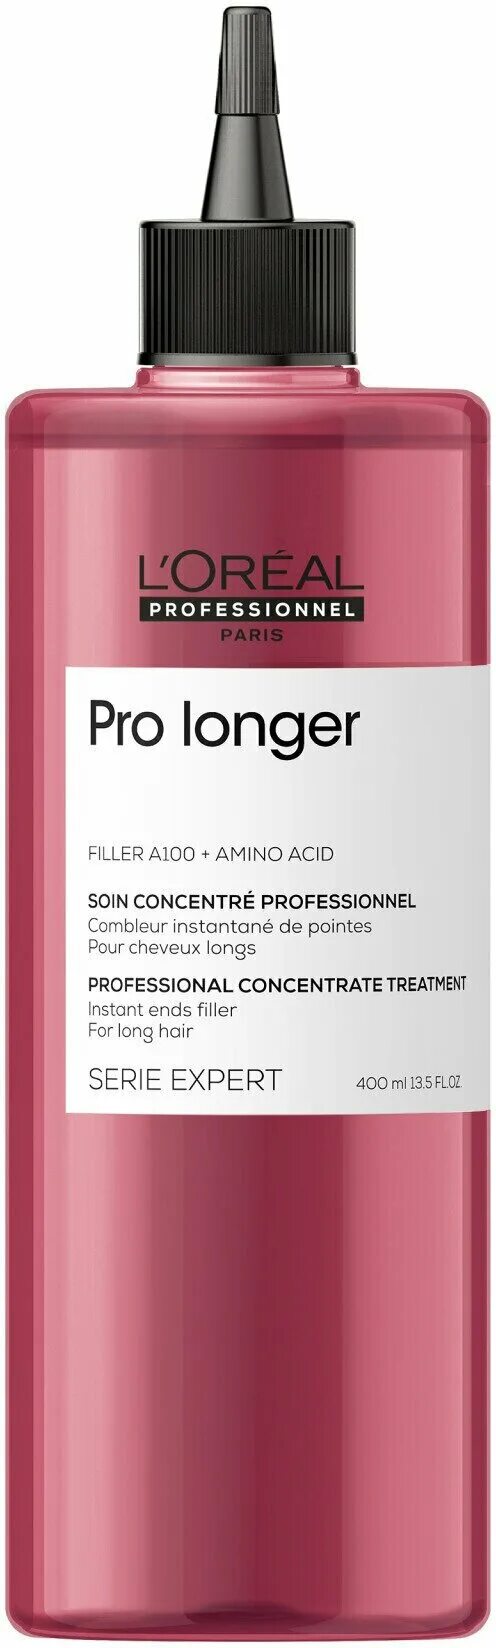 L'Oreal Professionnel serie Expert Pro longer. Филлер концентрат для волос l'Oreal. Pro longer филлер концентрат. Serie Expert Loreal prolonger. L oreal pro longer